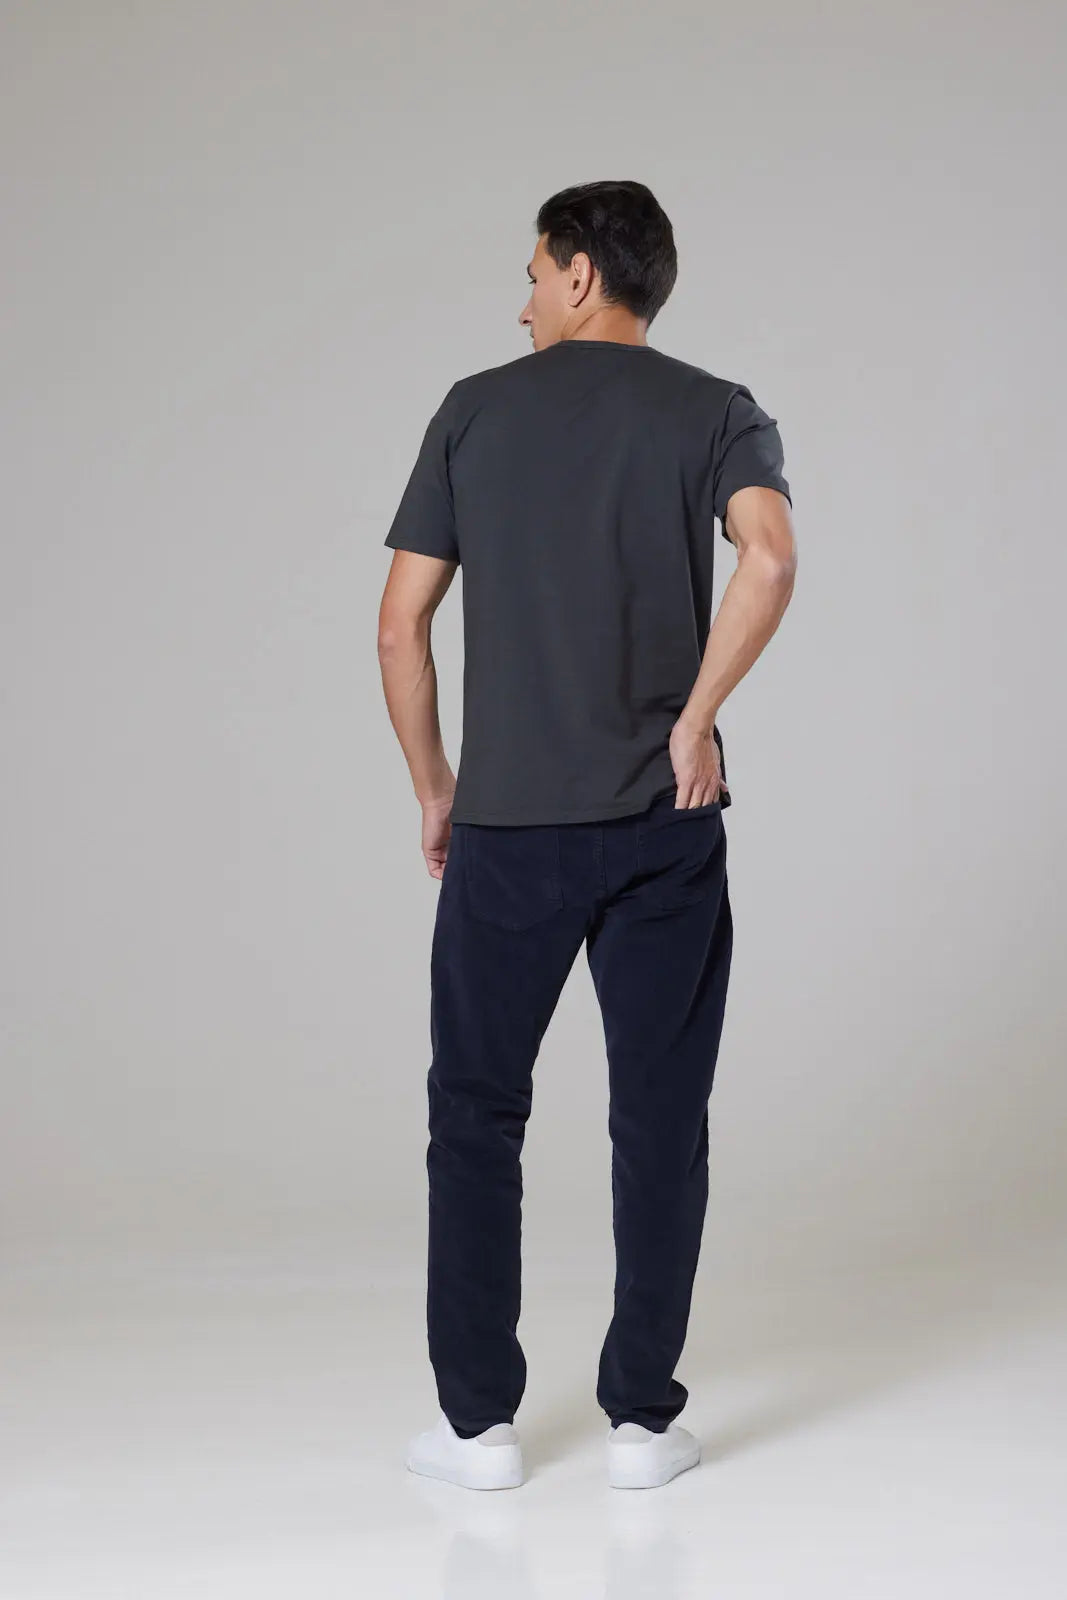 Trueman Short Sleeve Tee Shirt - Grey - Wear London